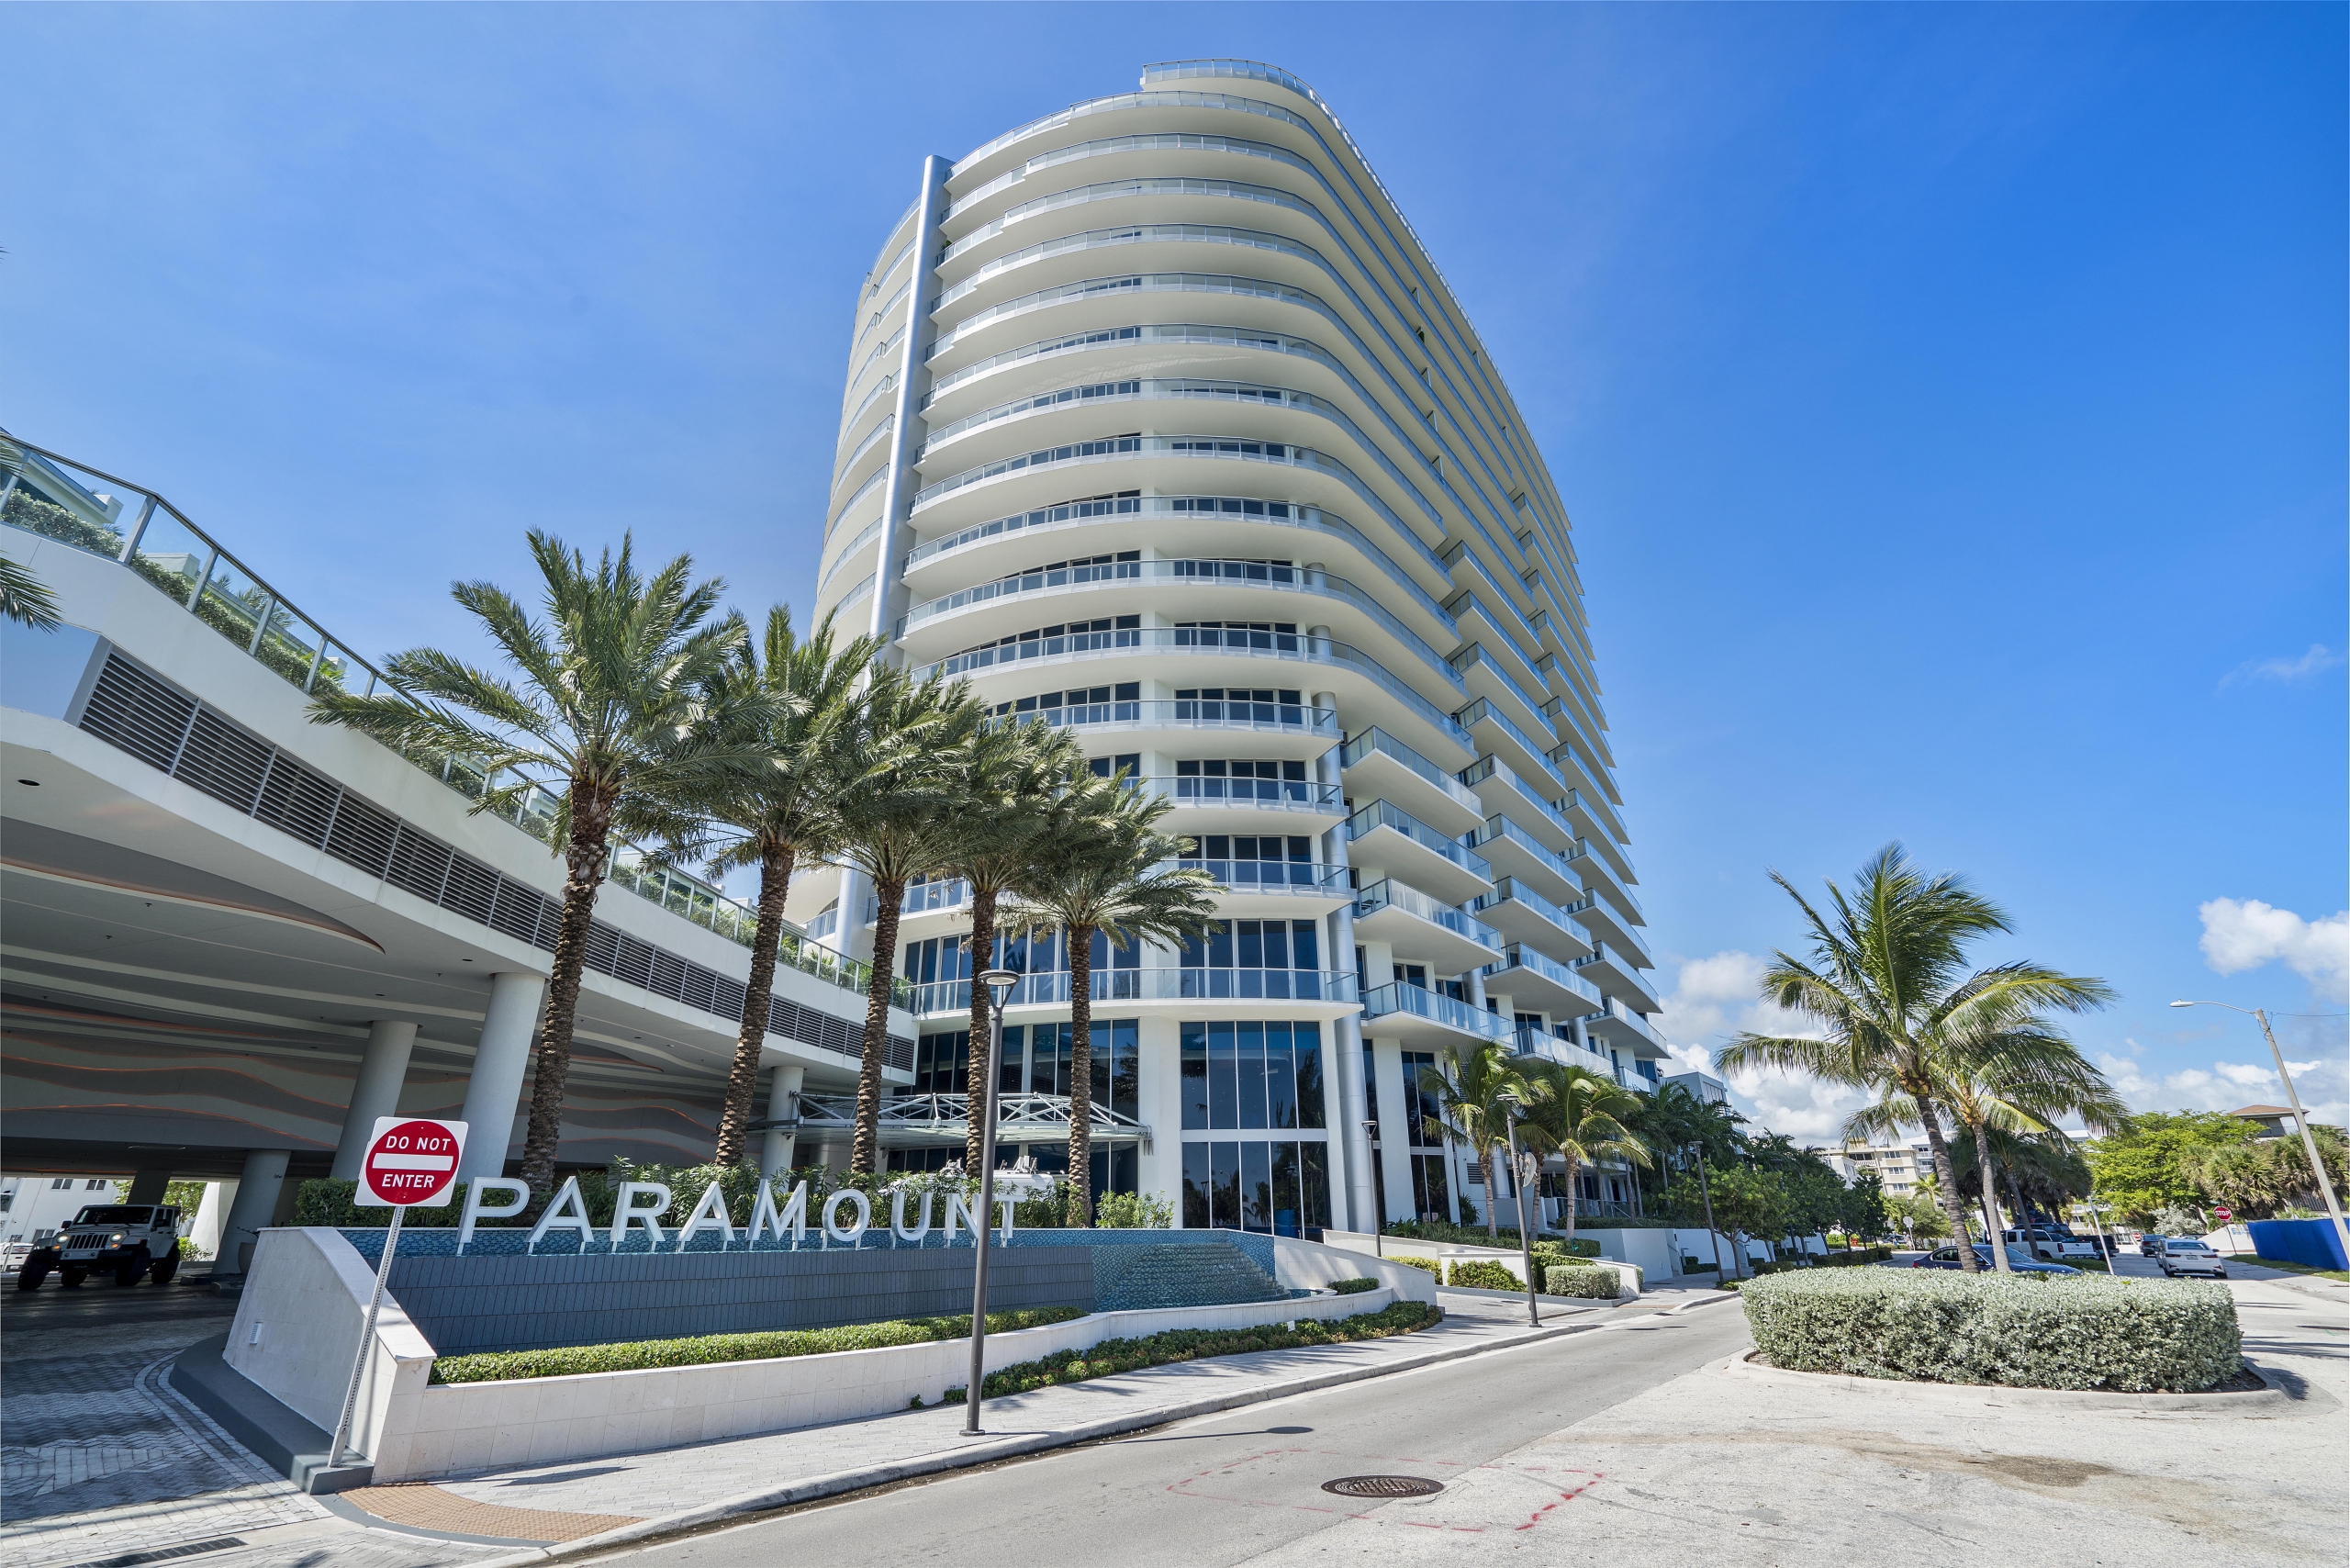 Paramount Residences Fort Lauderdale. 701 N Fort Lauderdale Beach Boulevard, Fort Lauderdale, Florida, 33304. Oceanfront. Luxury Condominiums. Five-Star Amenities.